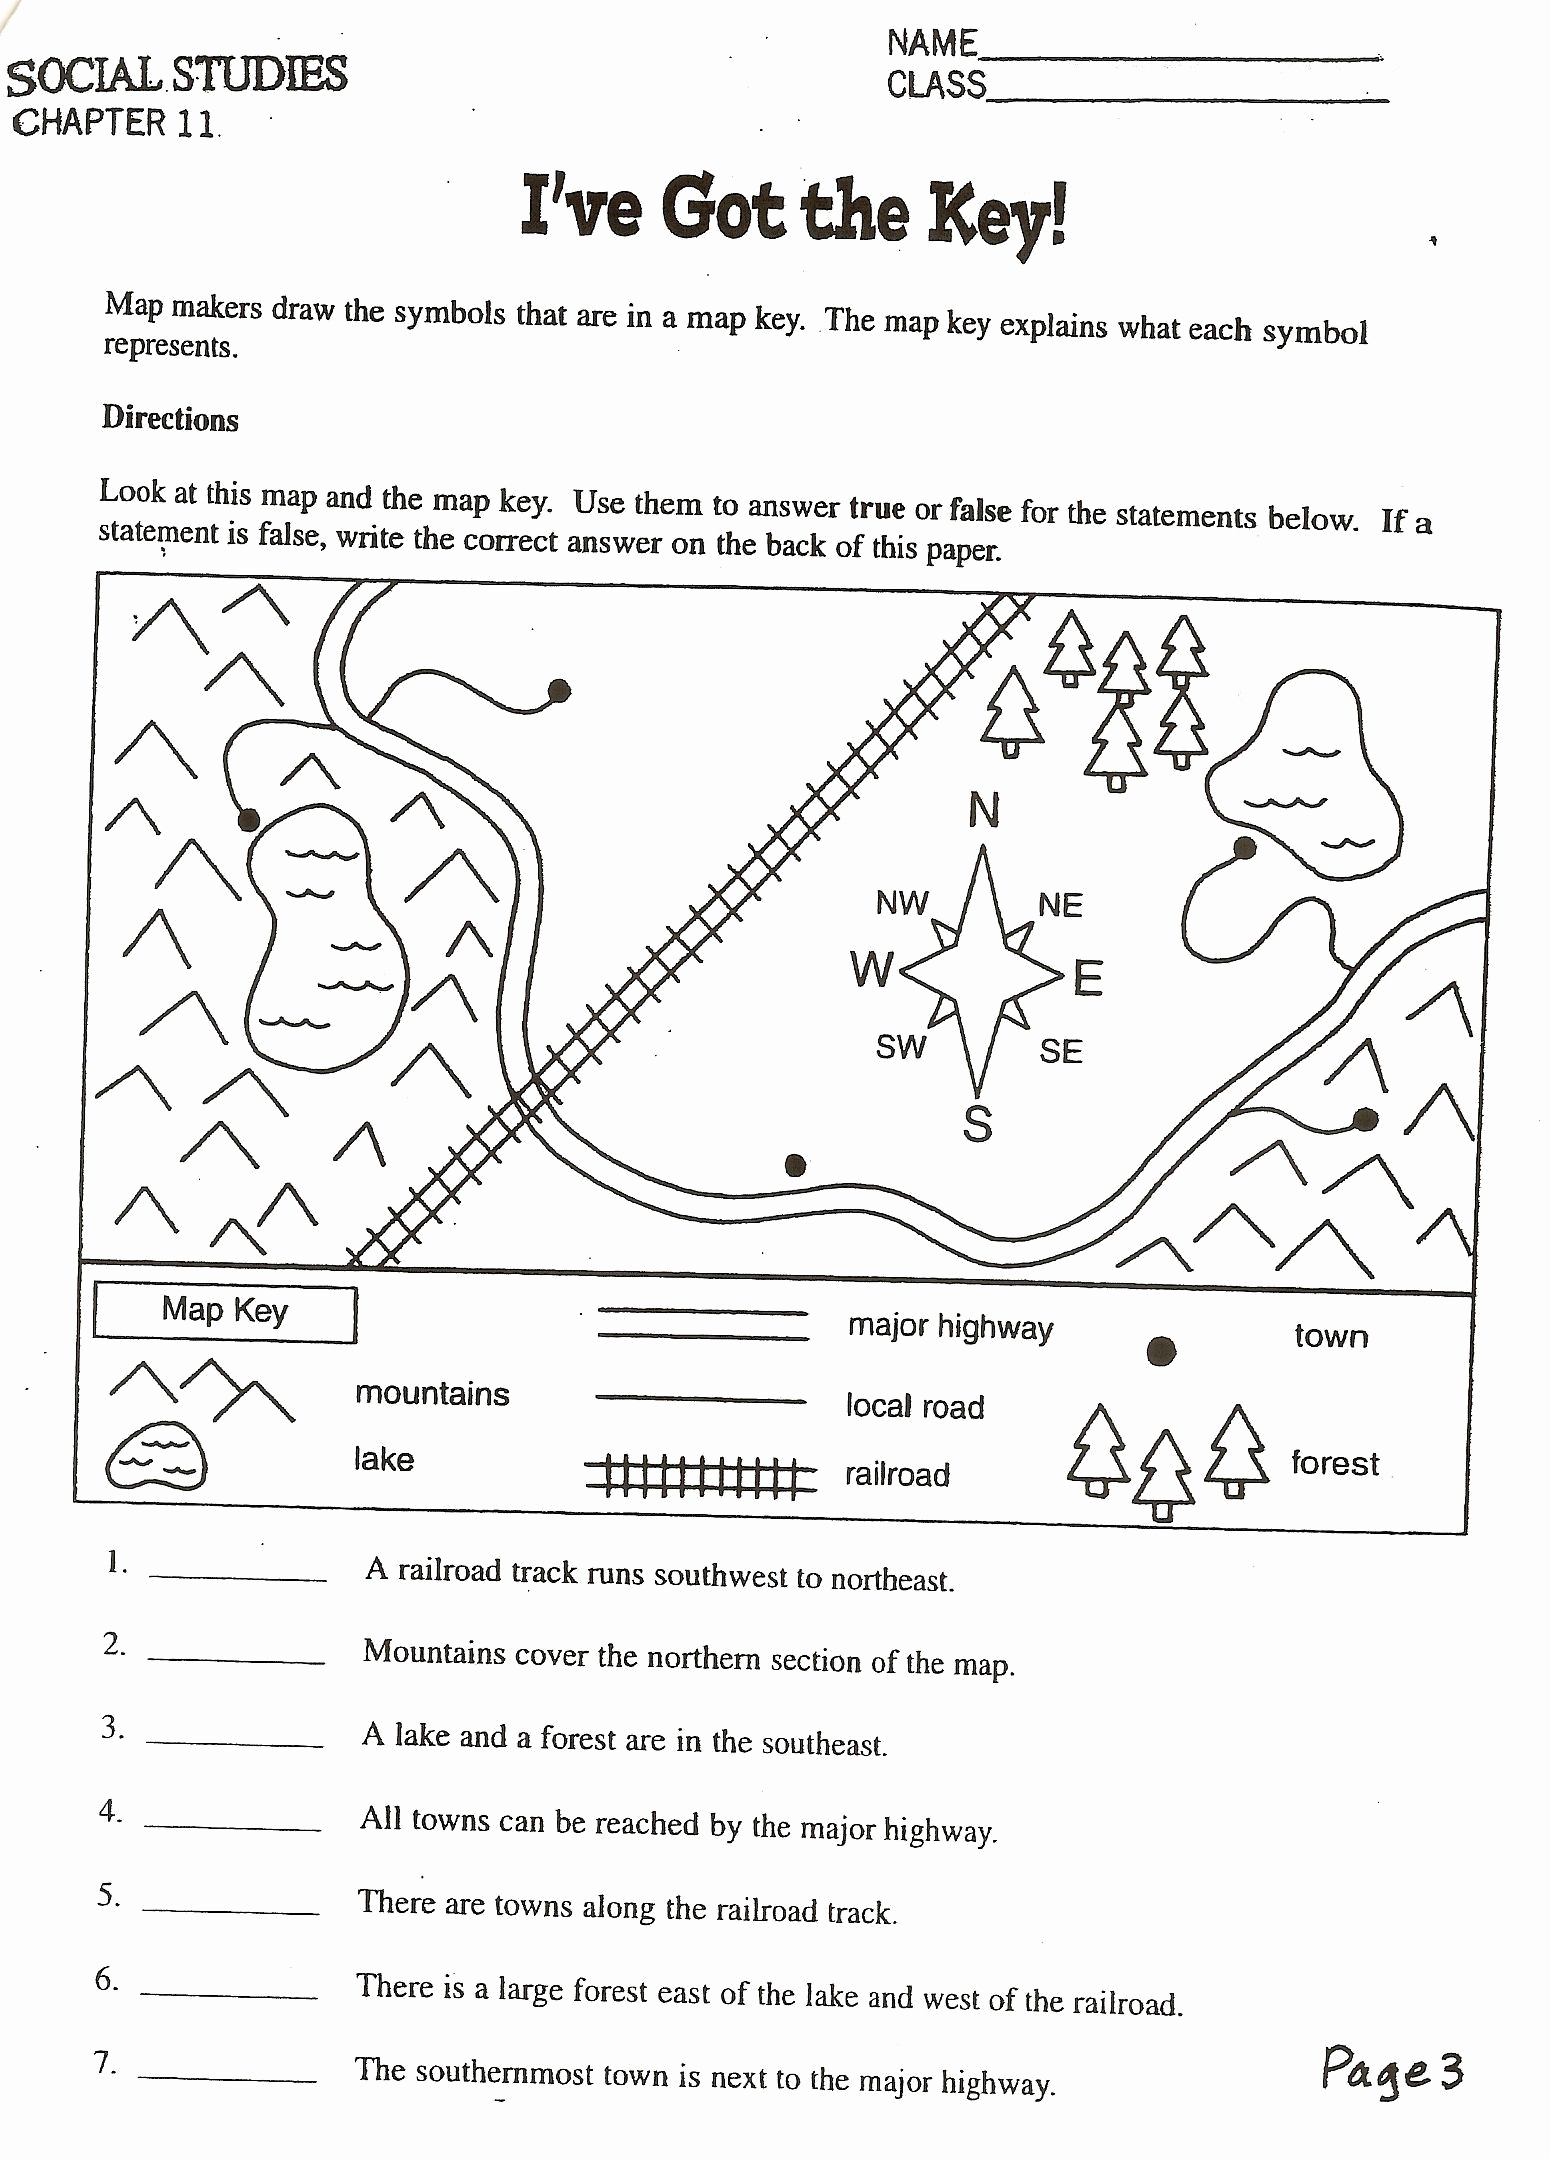 4th Grade Map Skills Worksheets Lovely Printable Map Skills Worksheets for 4th Grade Awesome Map